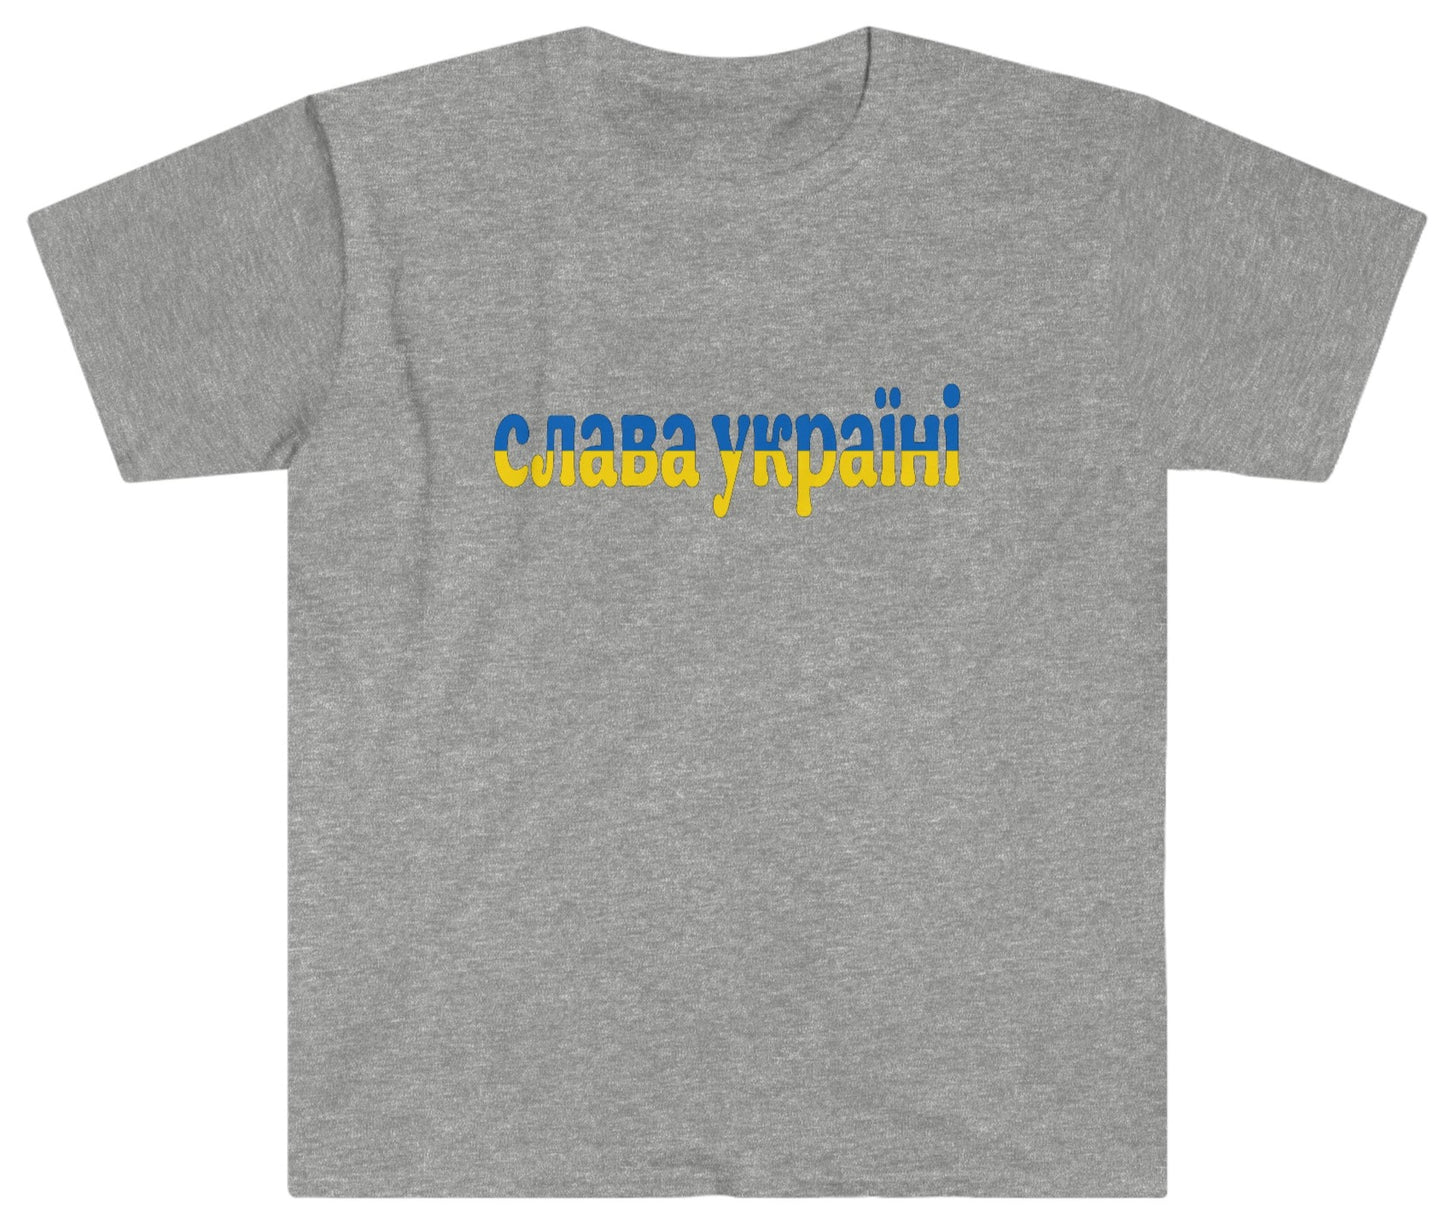 Glory to Ukraine (Slava Ukraini) - Unisex T-Shirt